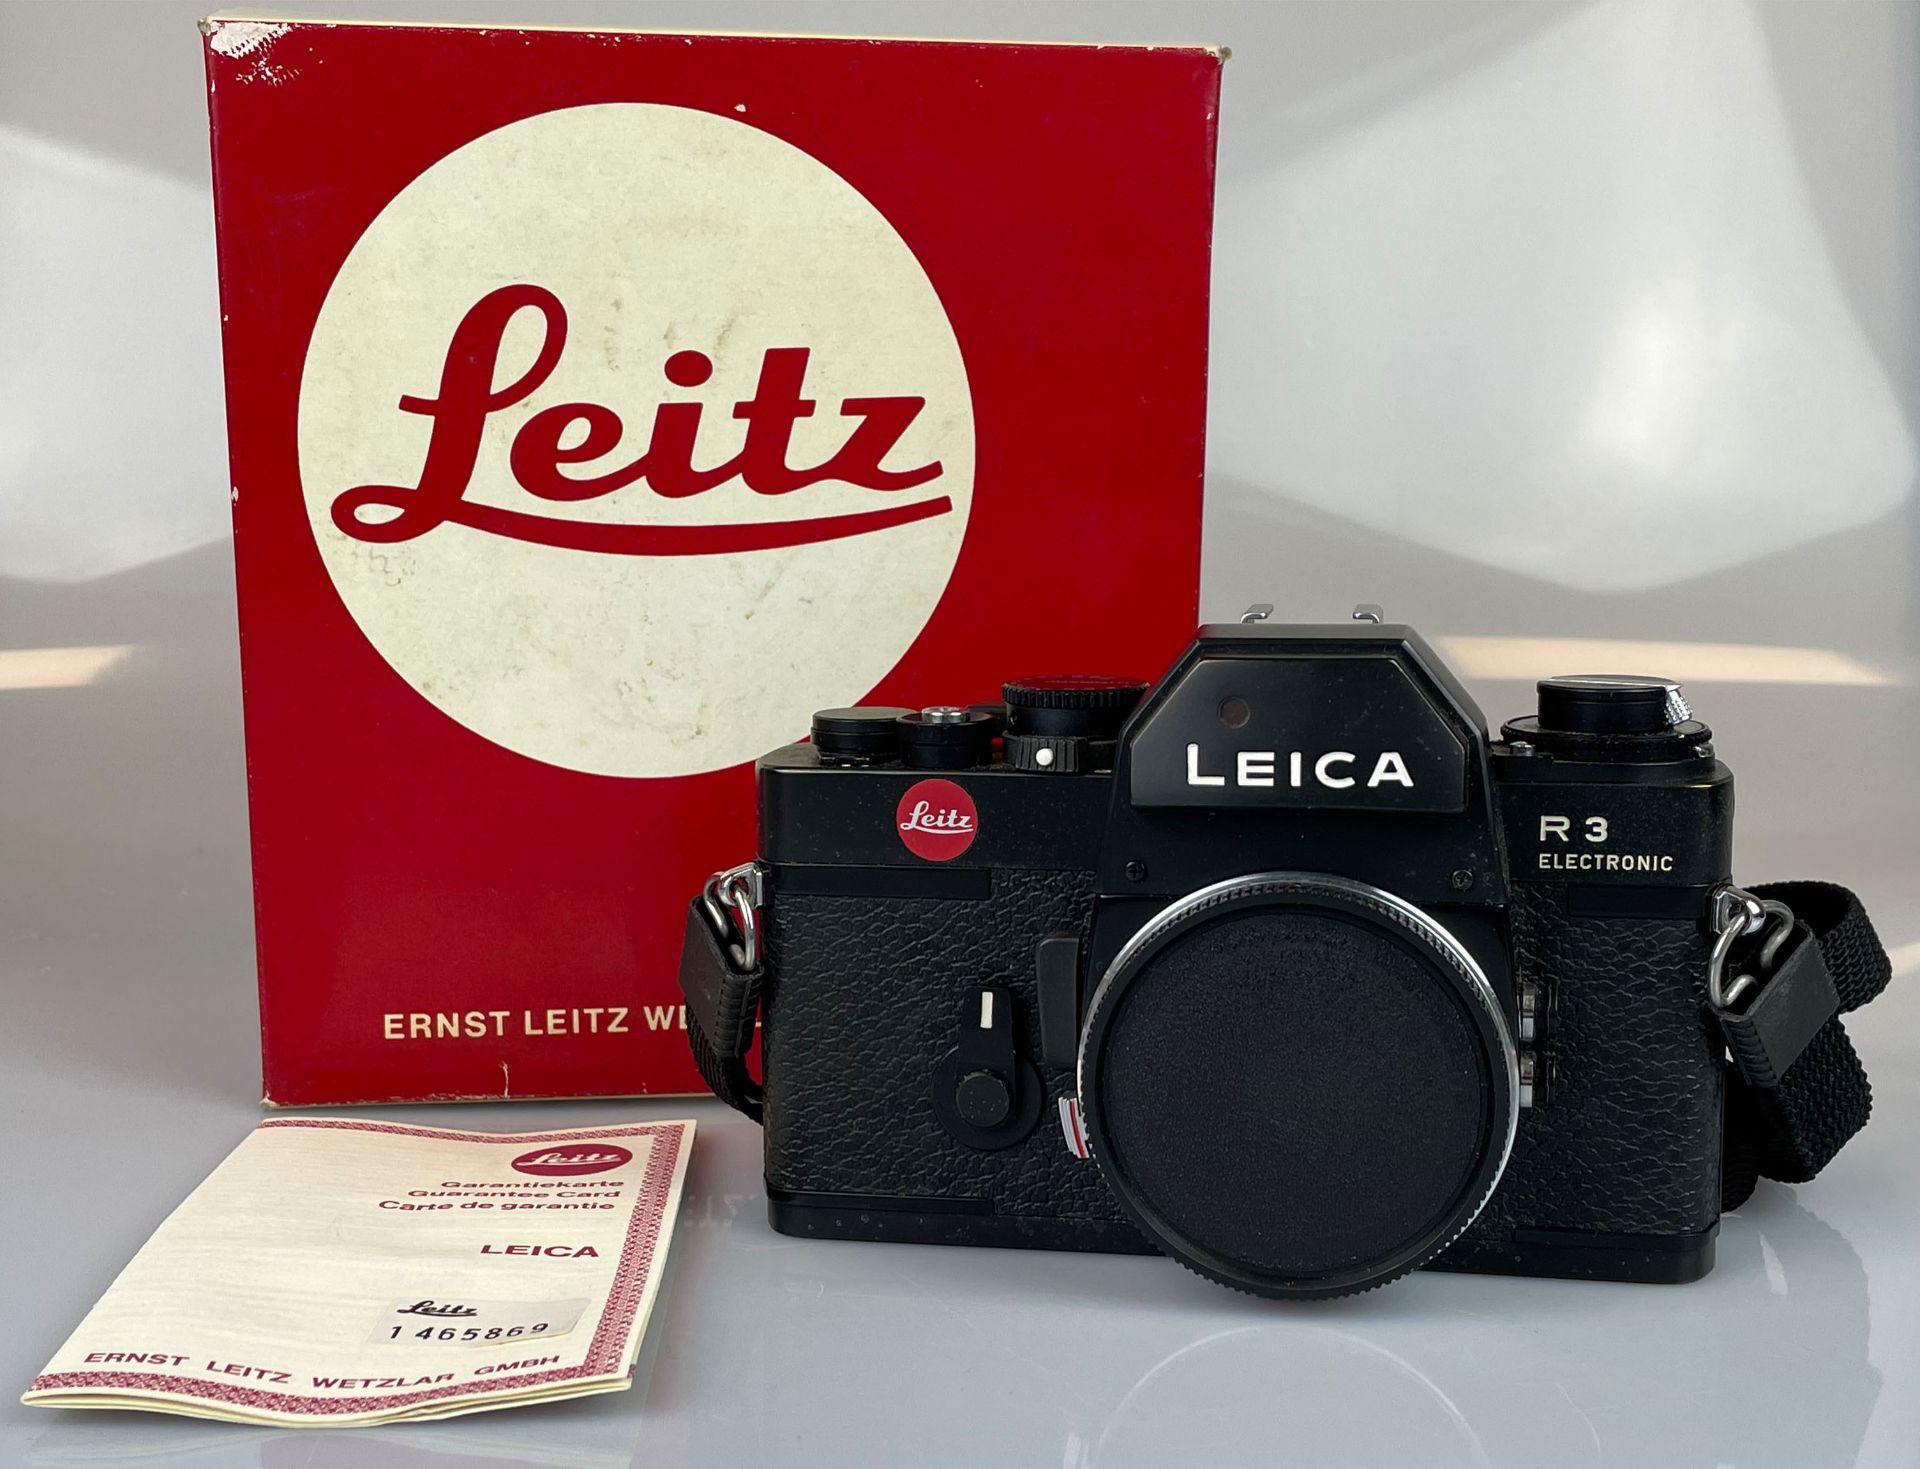 Kameragehäuse Leica R3 Electronic. Ohne Objektiv.